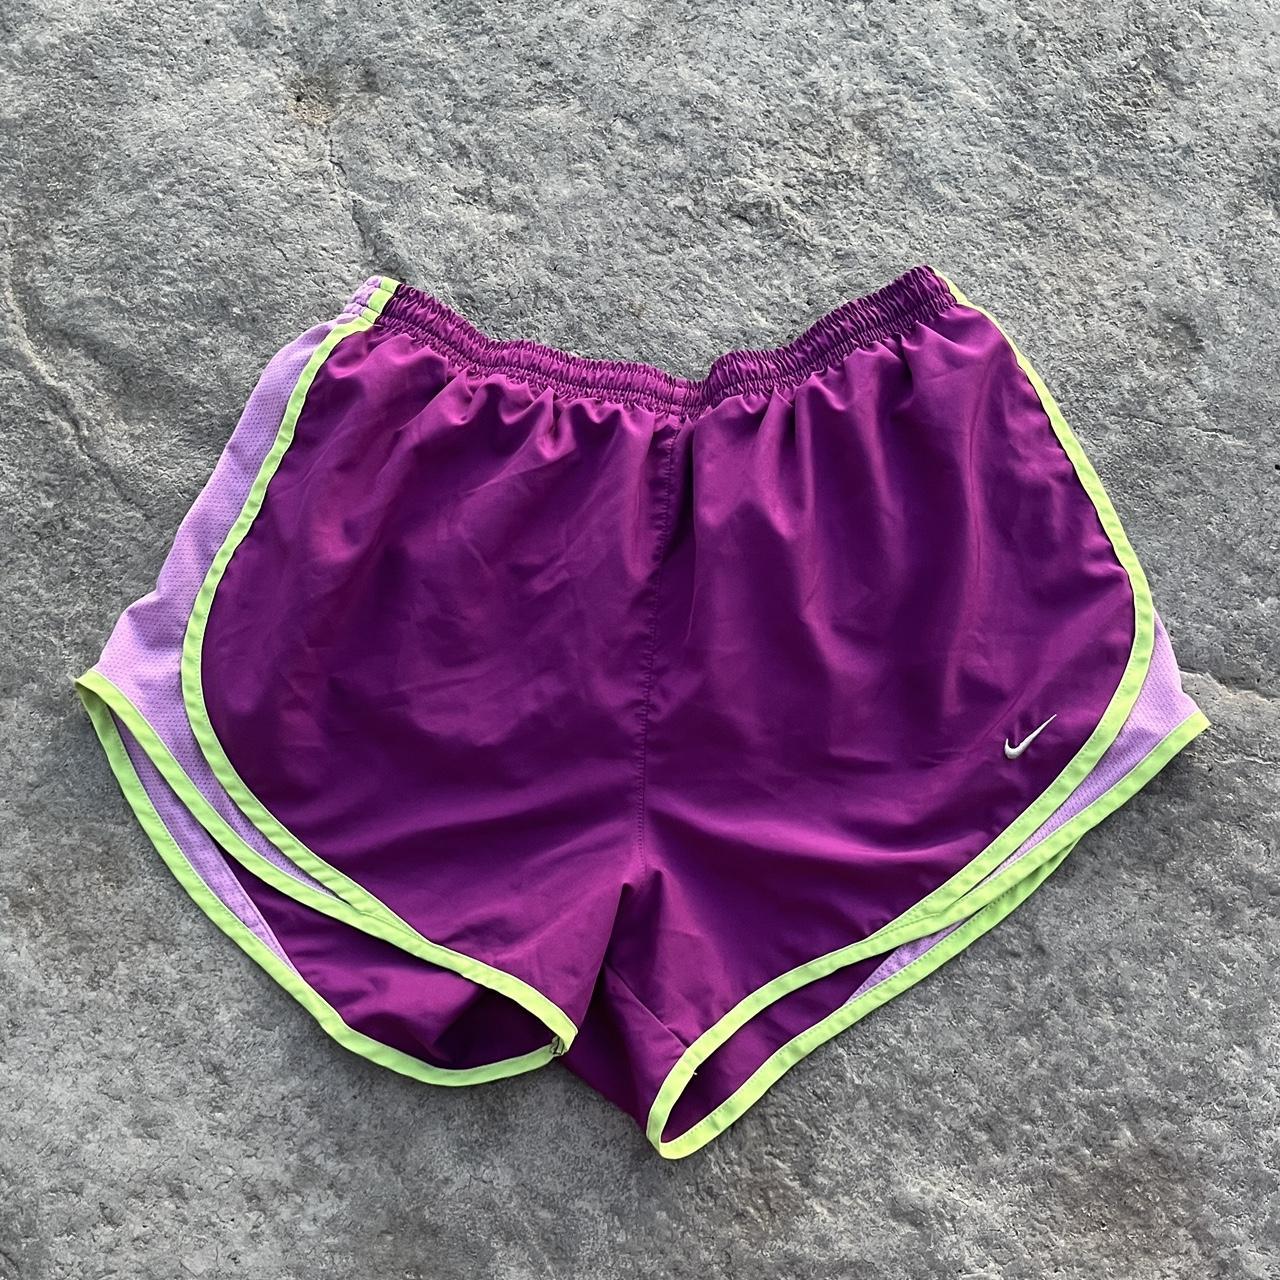 Nike Women's Purple and Green Shorts | Depop